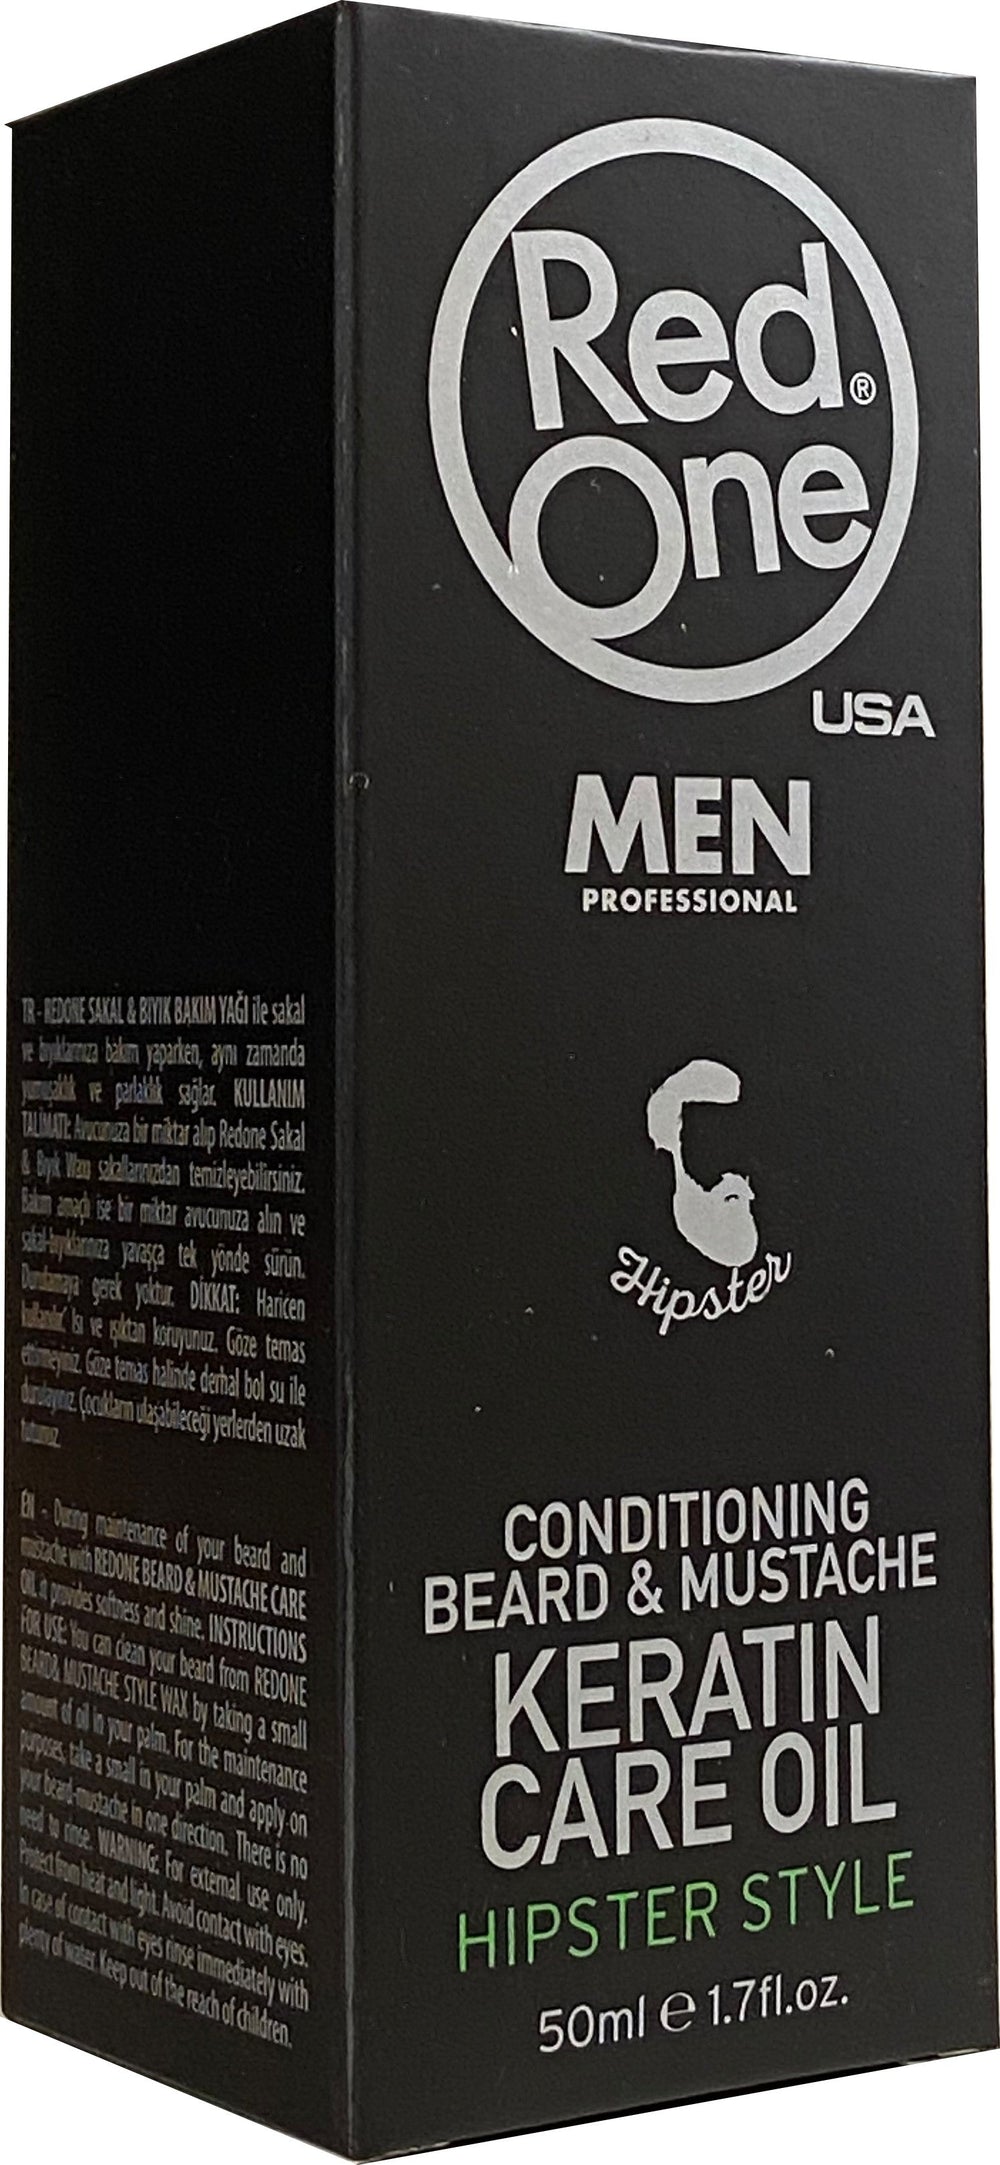 Redone Men Beard Mustache Care Oil 50 ml - Africa Products Shop